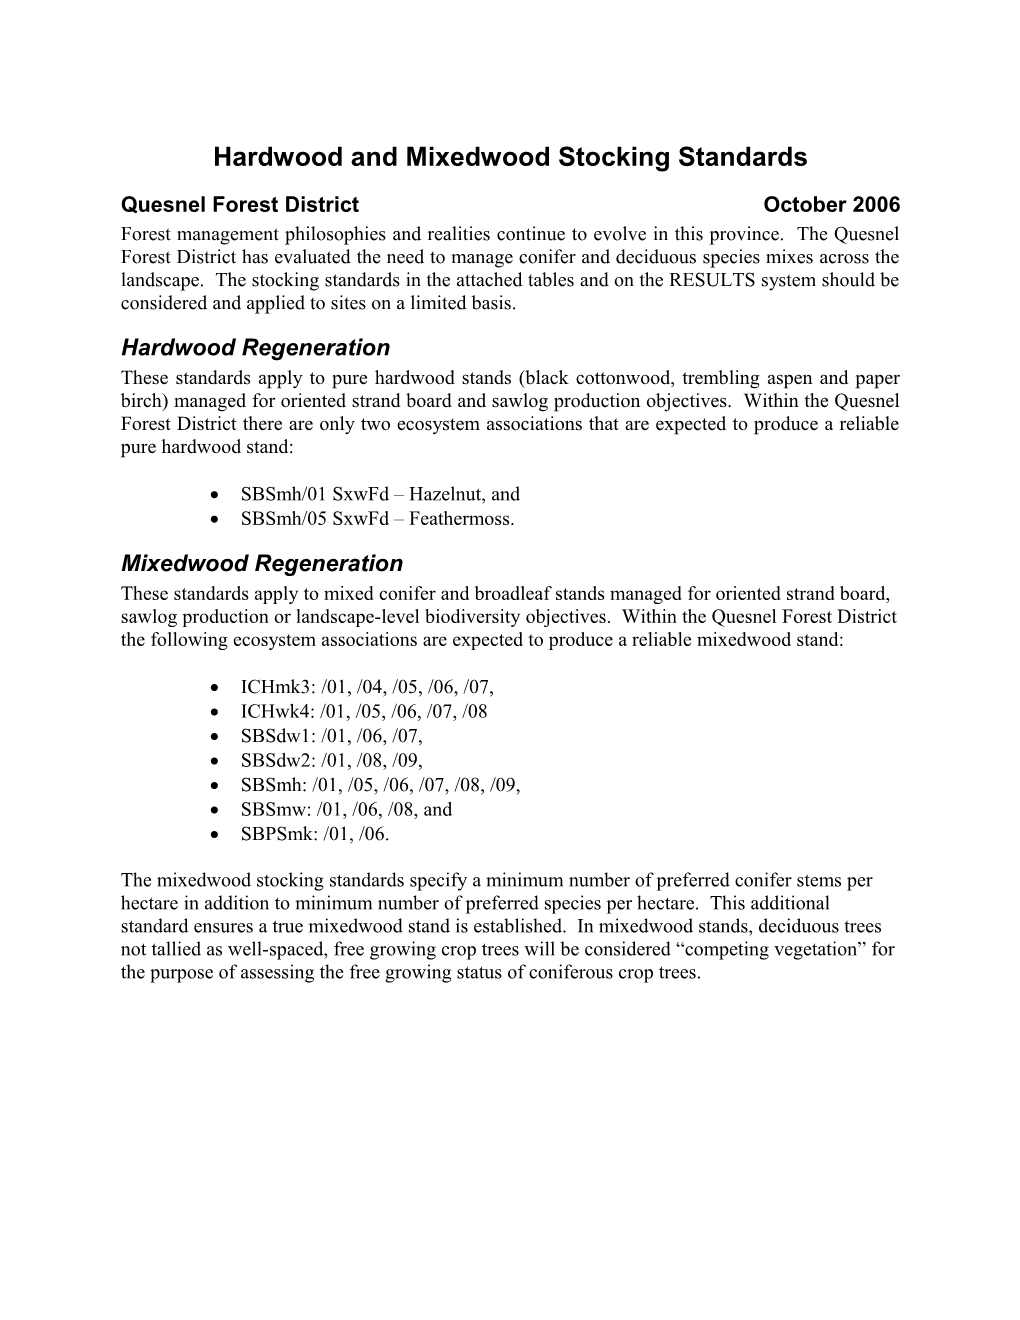 Deciduous and Mixedwood Stocking Standards